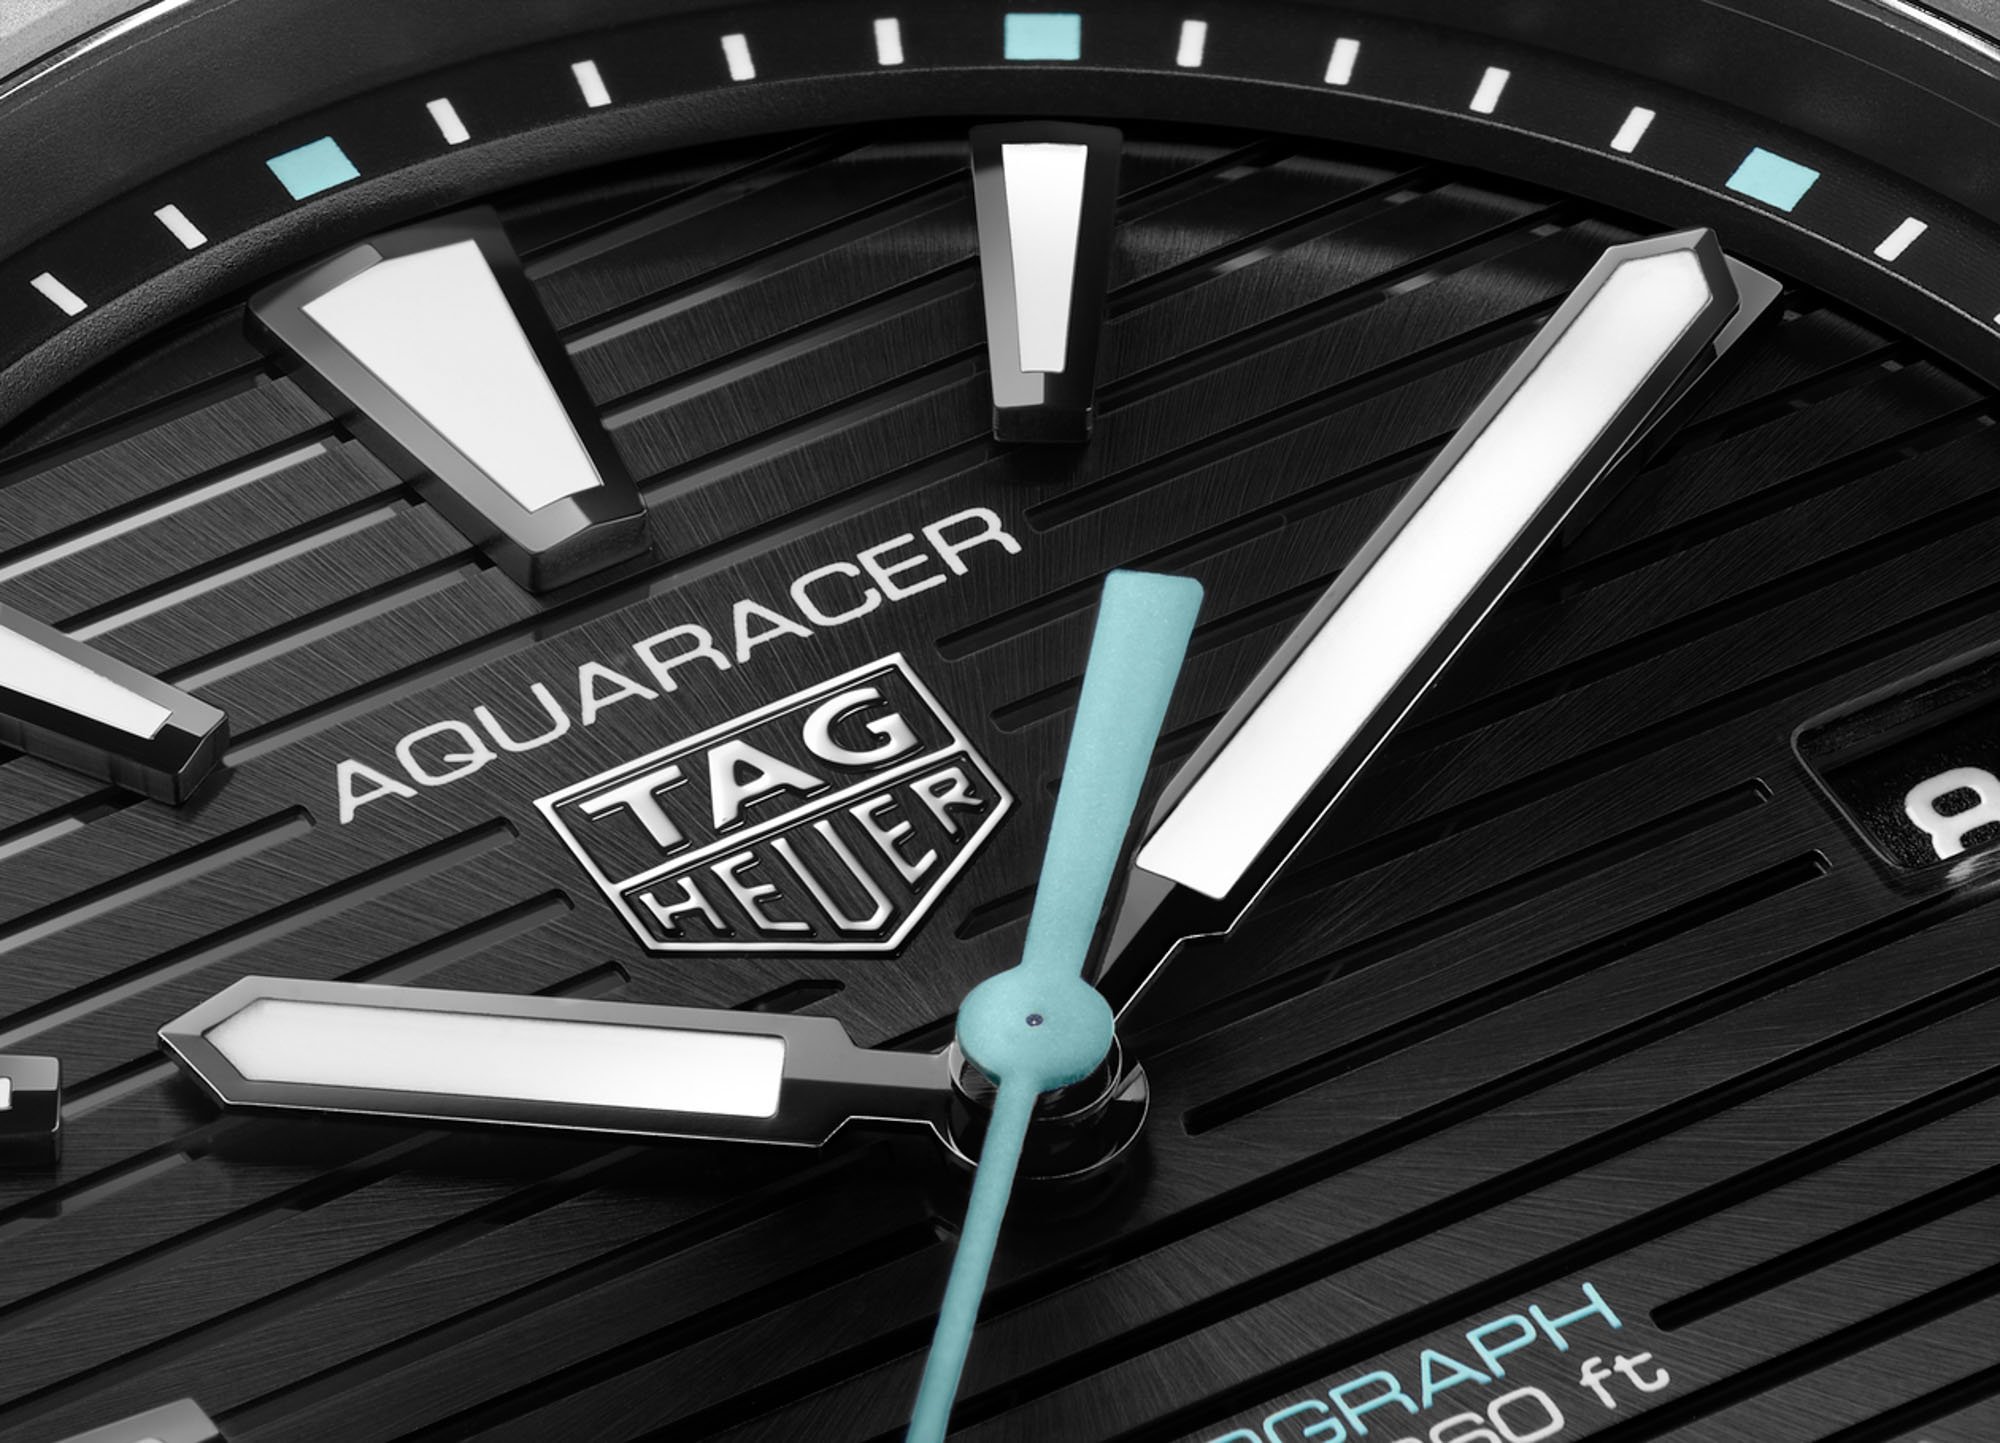 Tag Heuer представляет титановые часы Aquaracer Professional 200 Solargraph